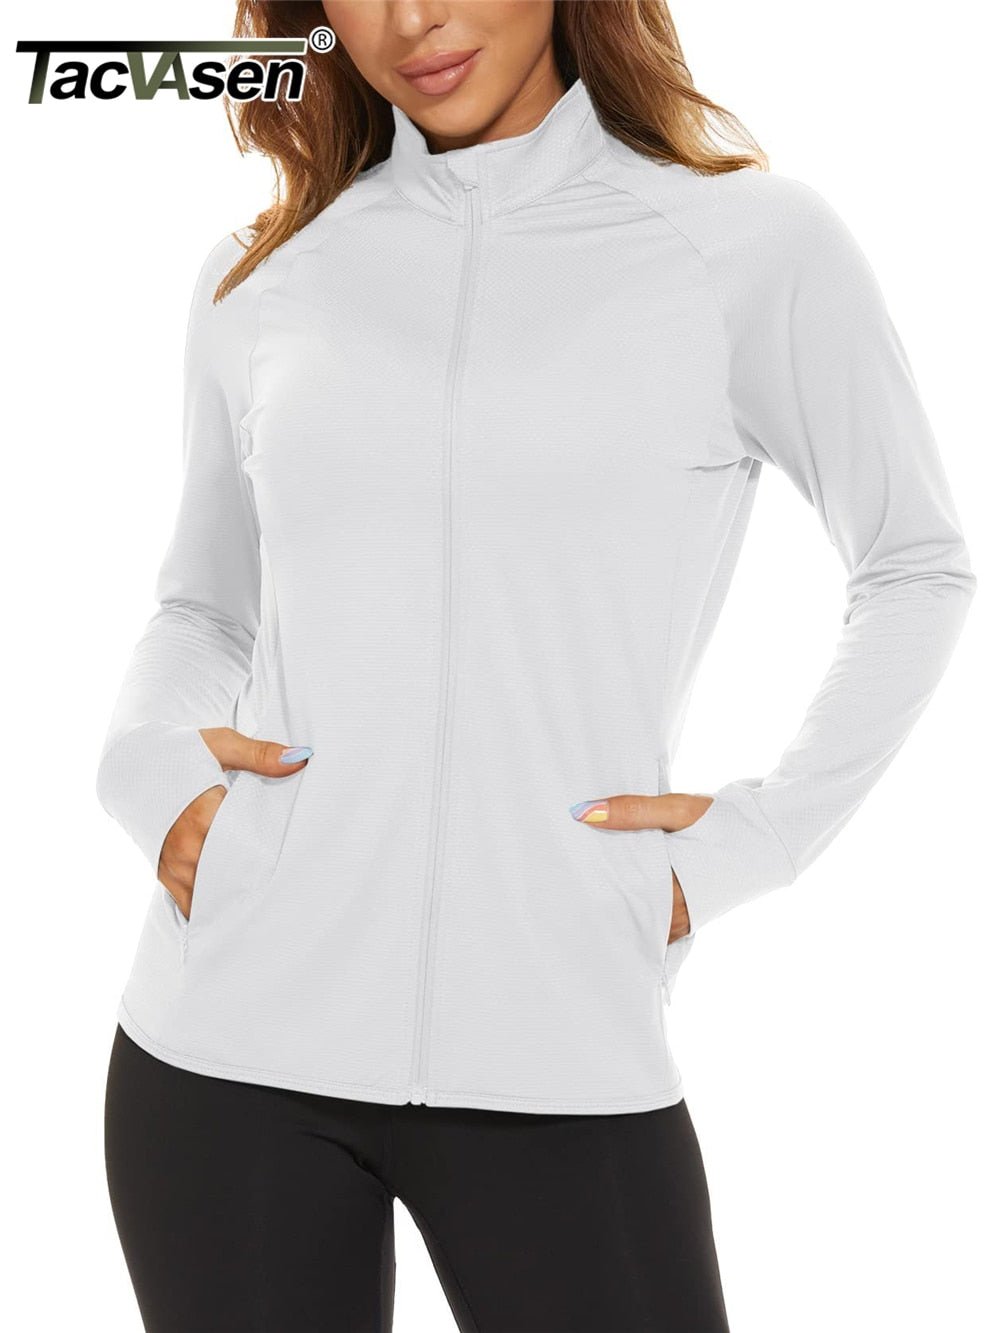 TACVASEN UPF 50+ Sun Protection Summer Shirts Womens Long Sleeve Shirts Full Zip Casual Jackets Zipper Pockets Golf Athlete Tops - Bargainwizz